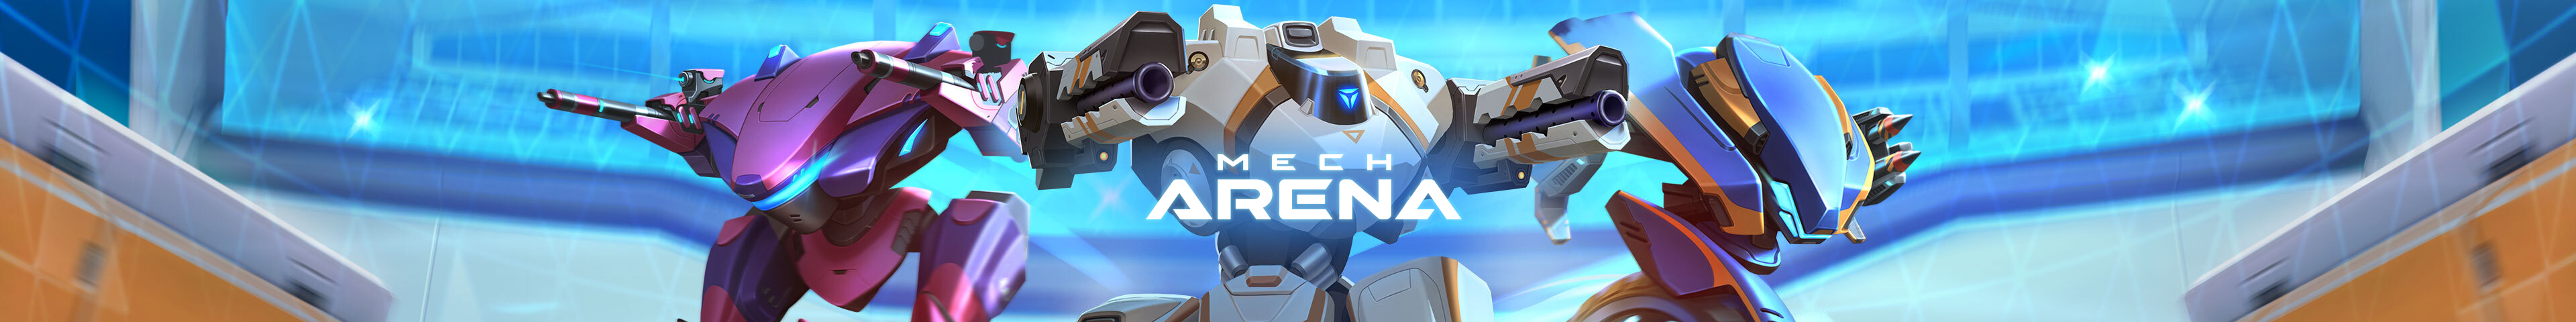 Mech Arena (メカアリーナ) - JP